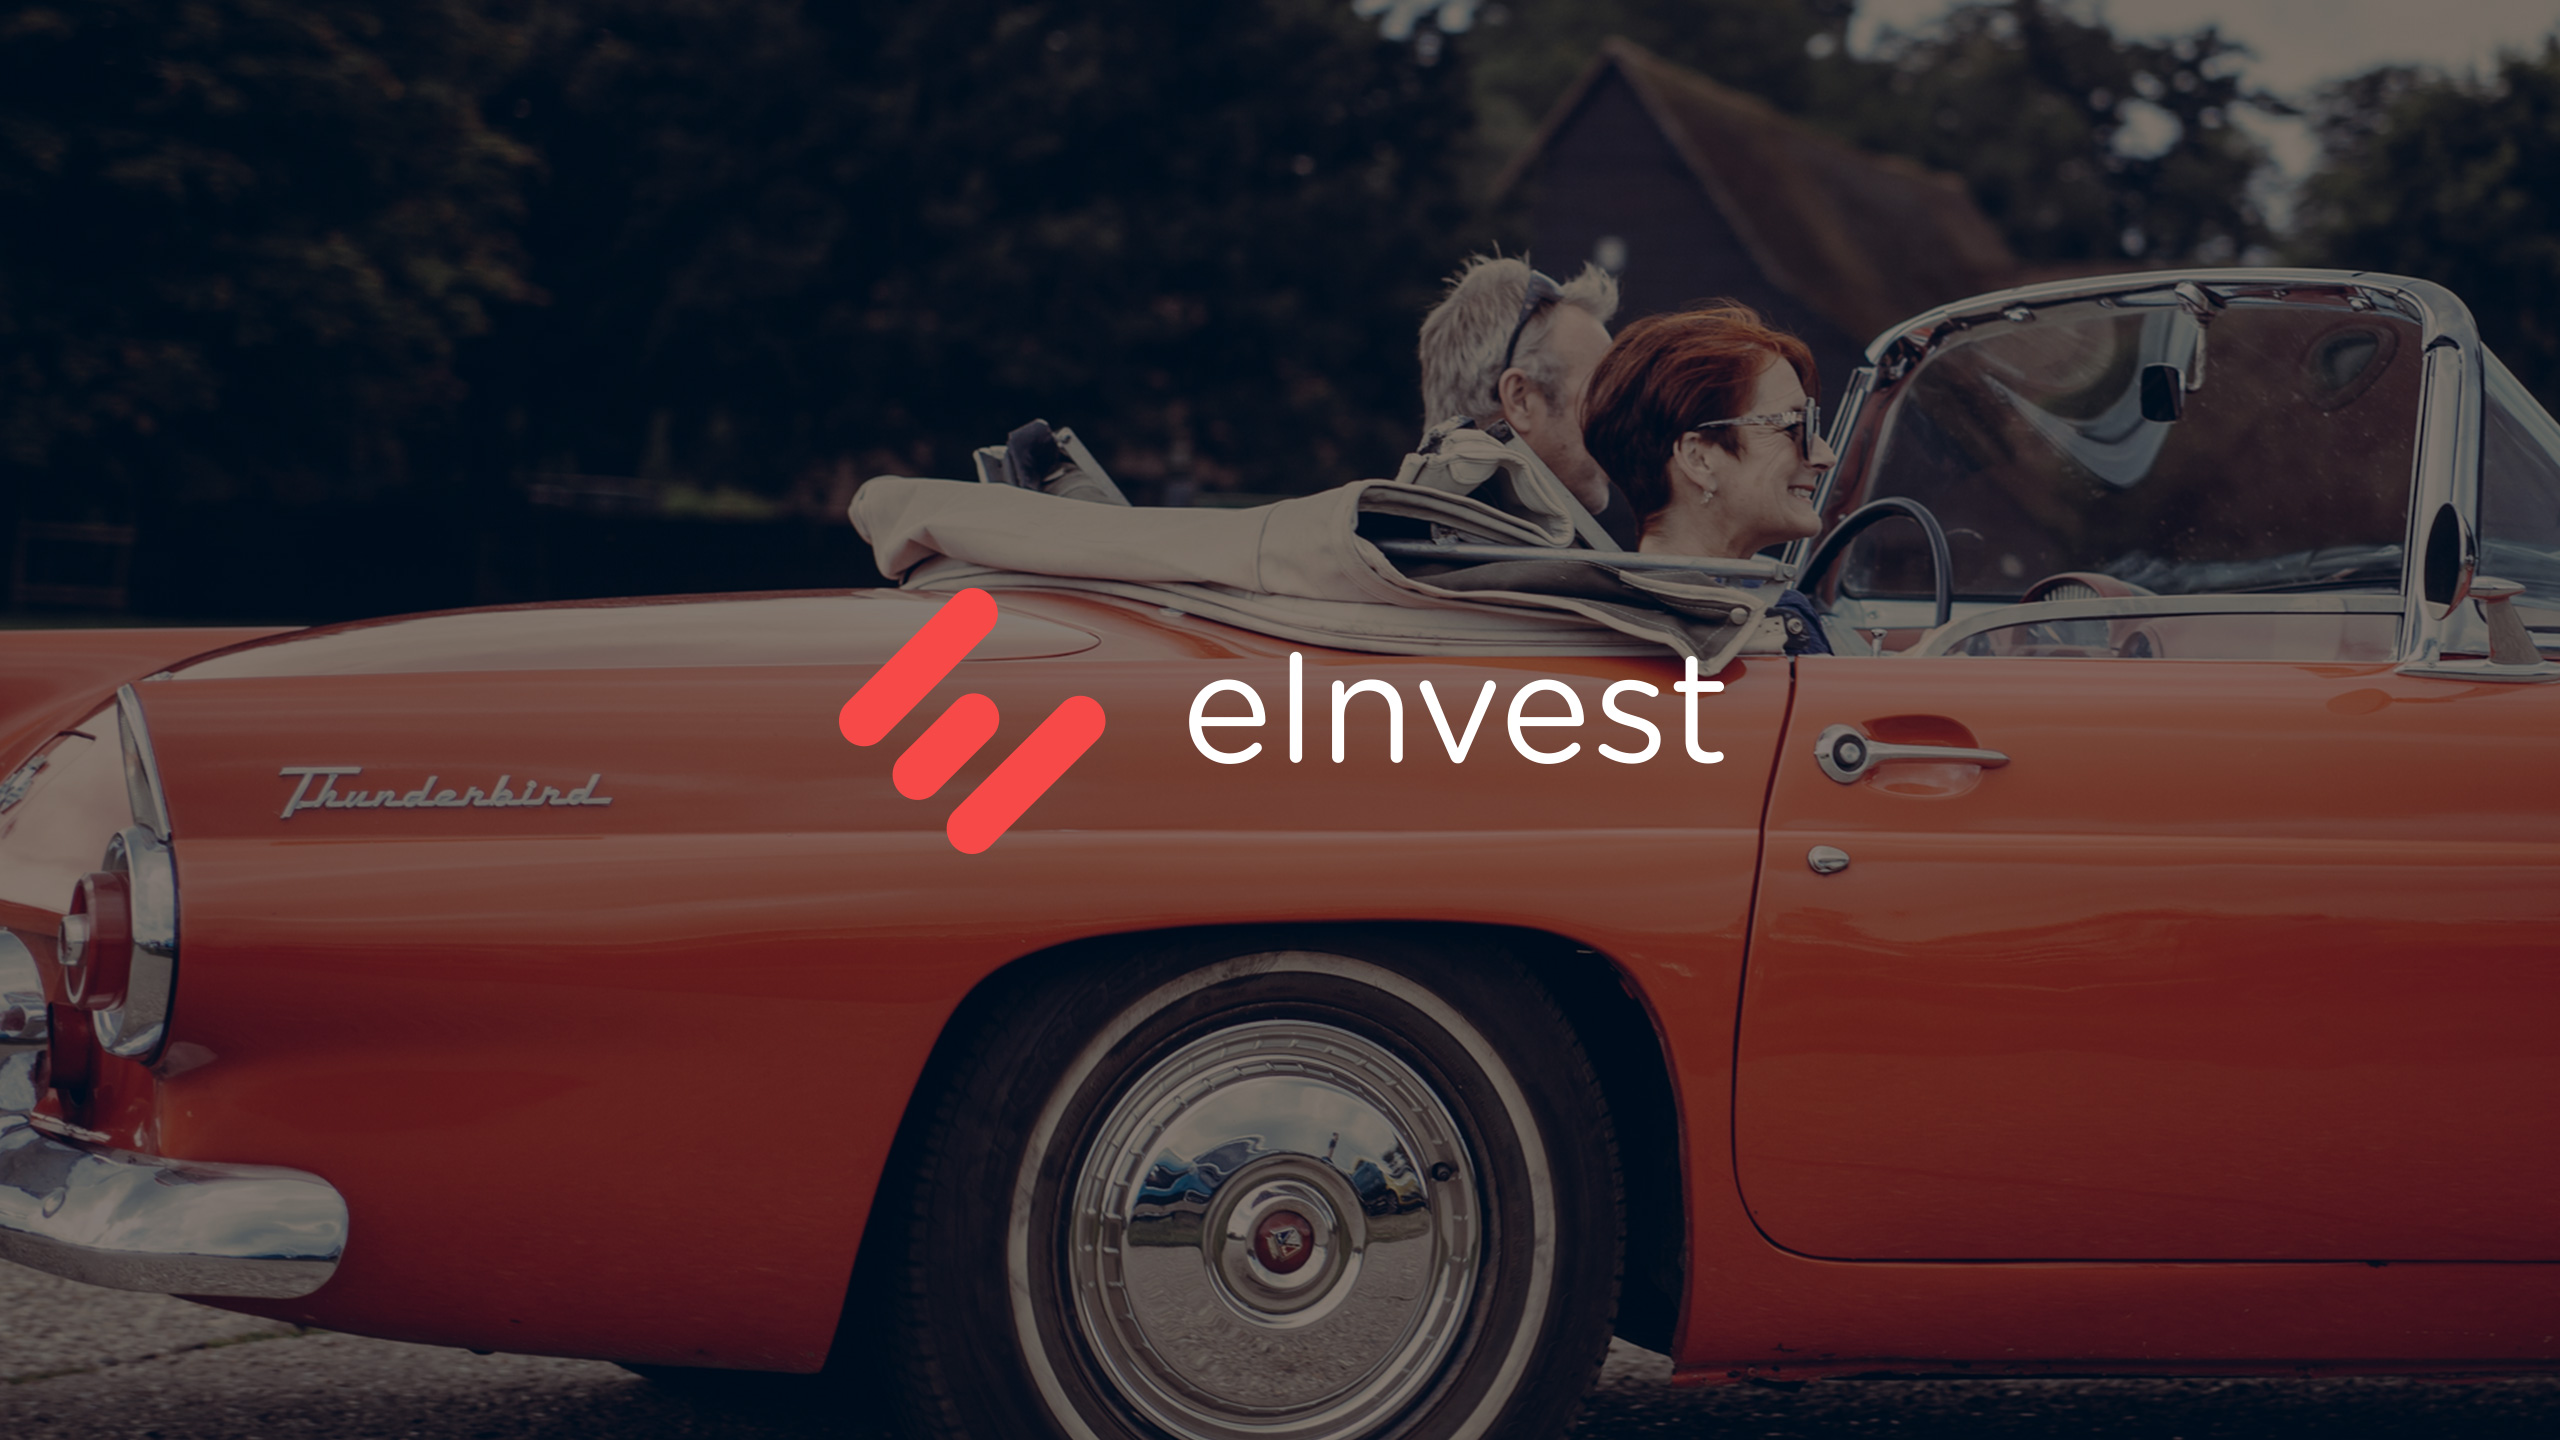 eInvest Branded Lifestyle Image